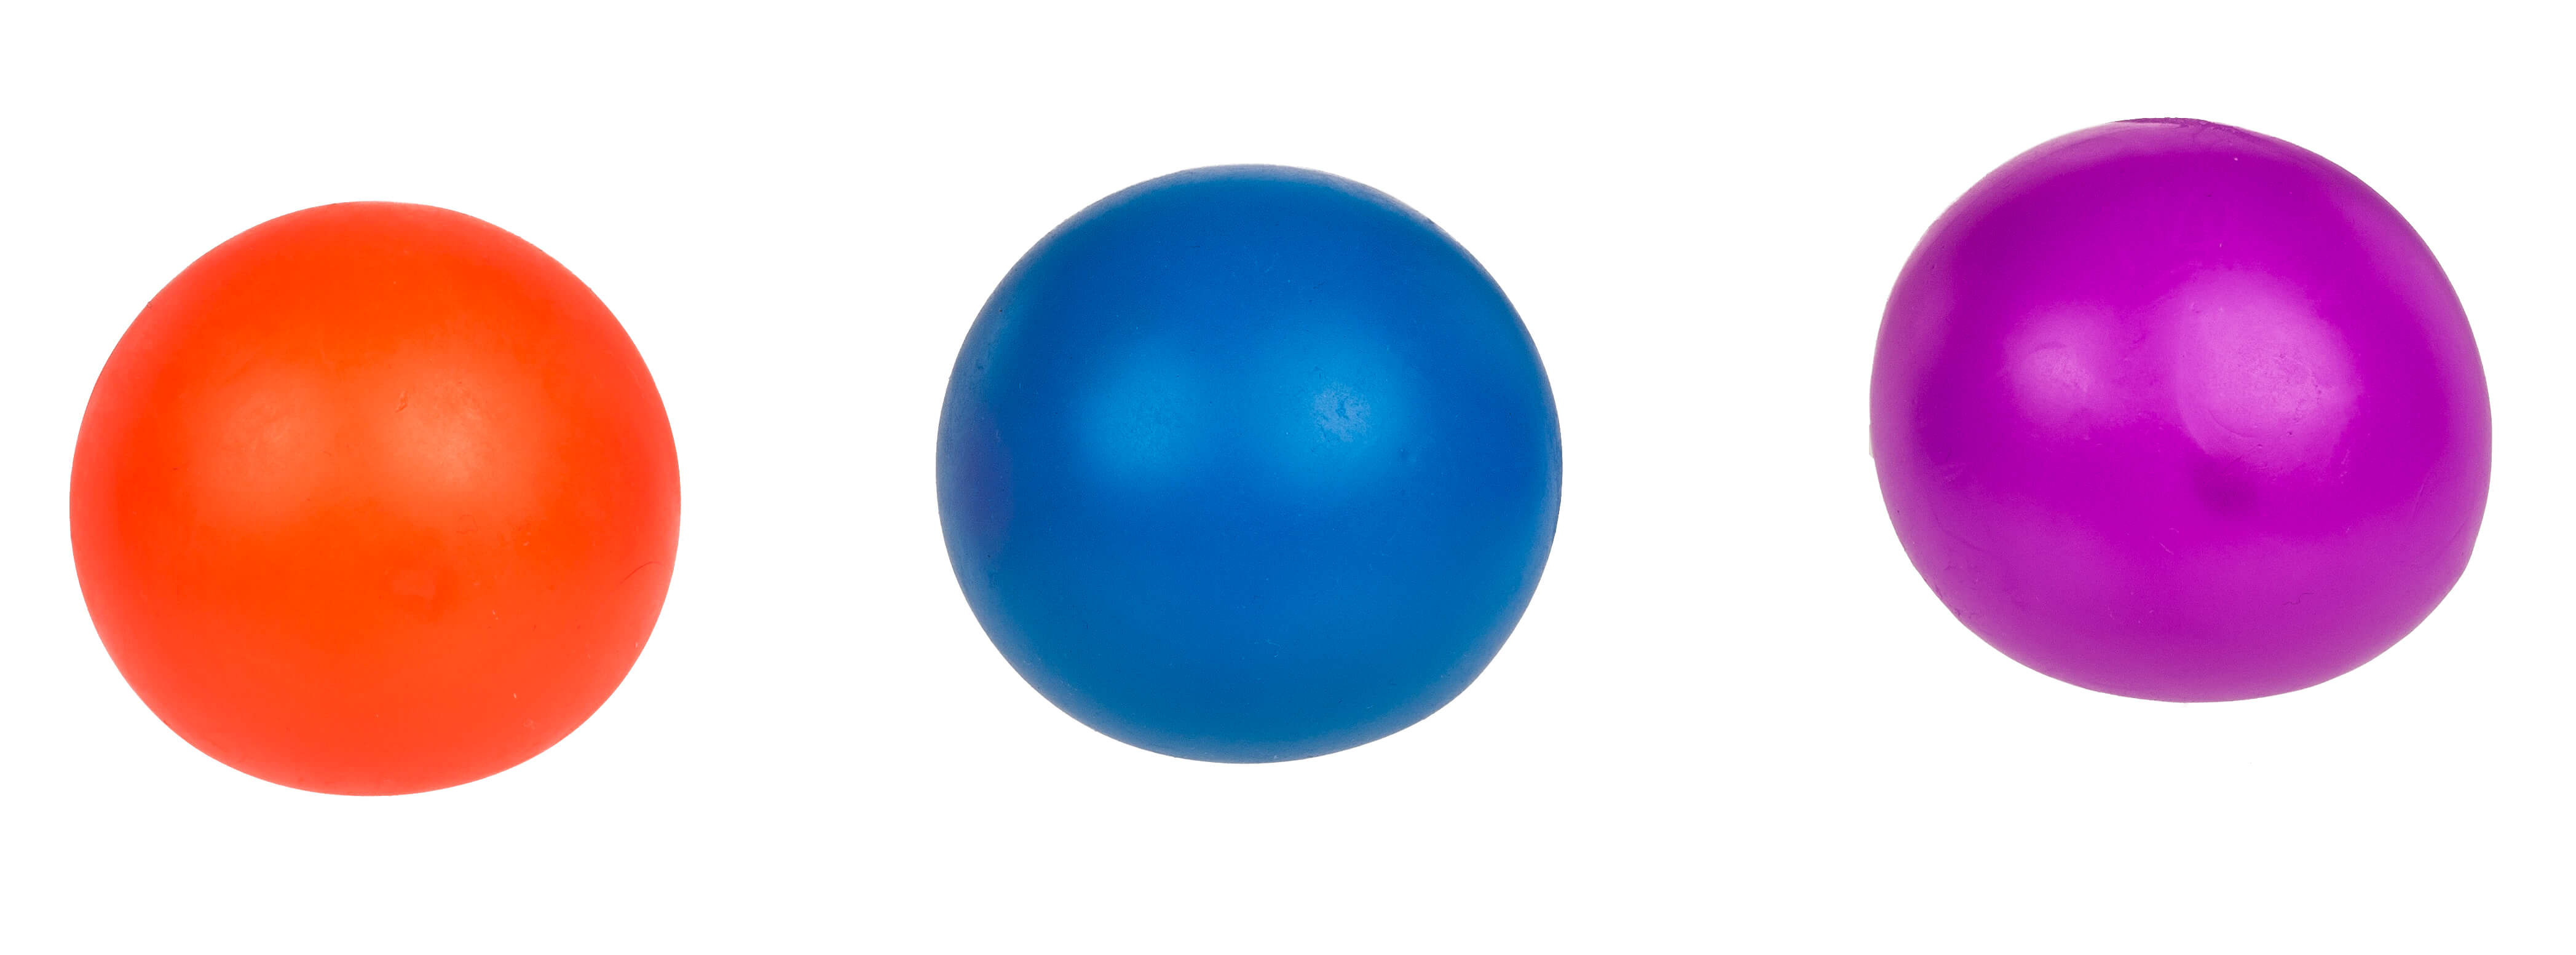 Set of 3 anti-stress ball 3.5cm